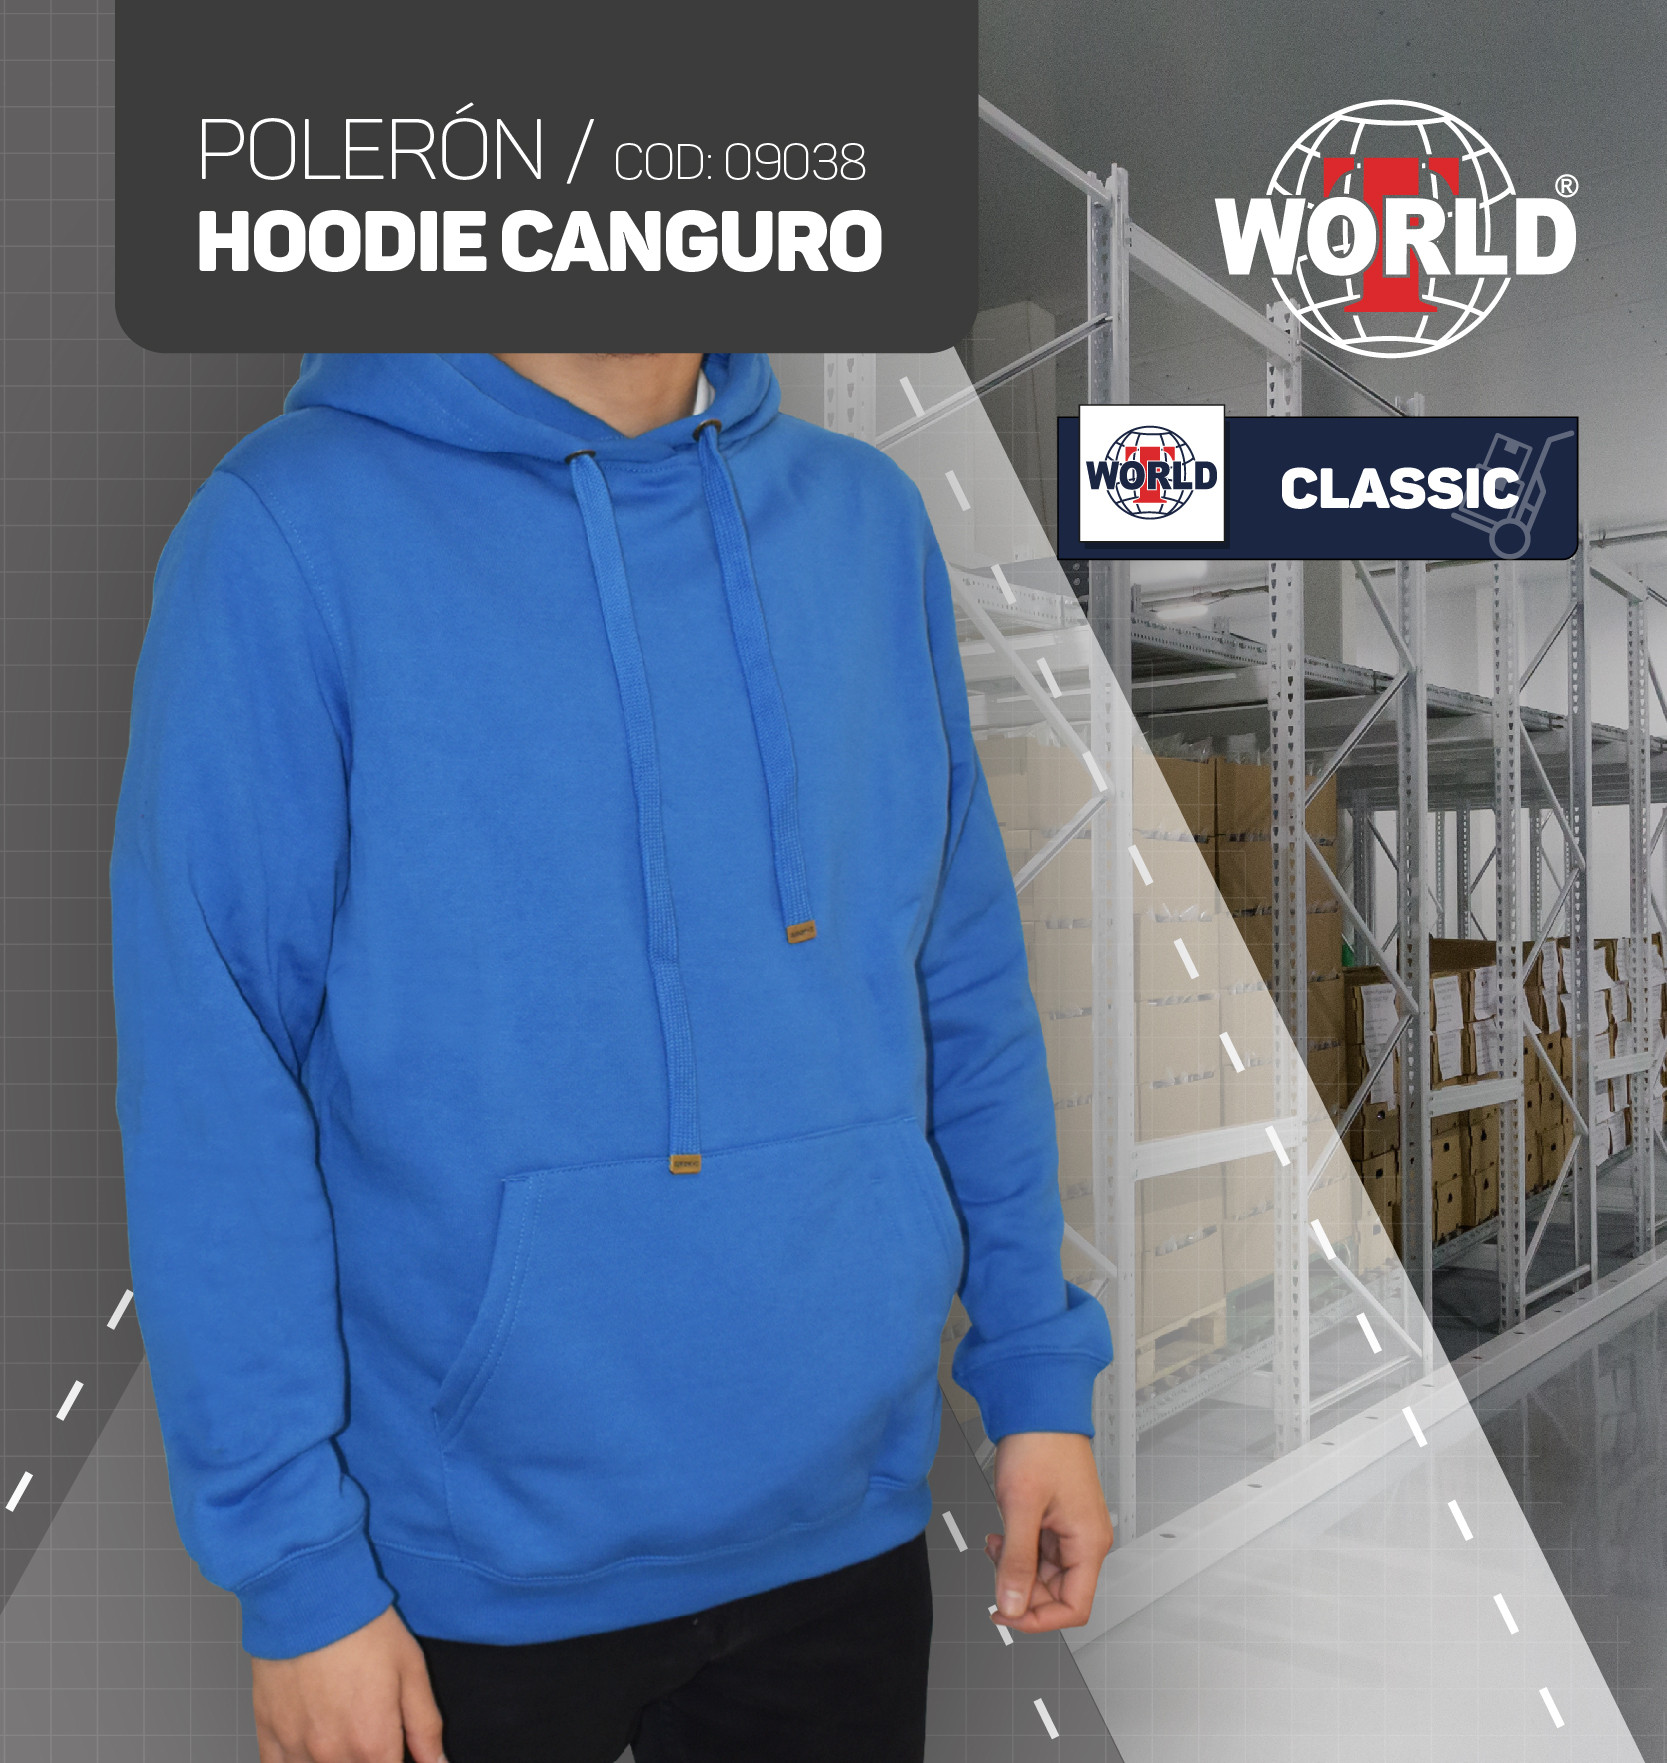 Polerón Hoodie Canguro / T-WORLD WORKWEAR